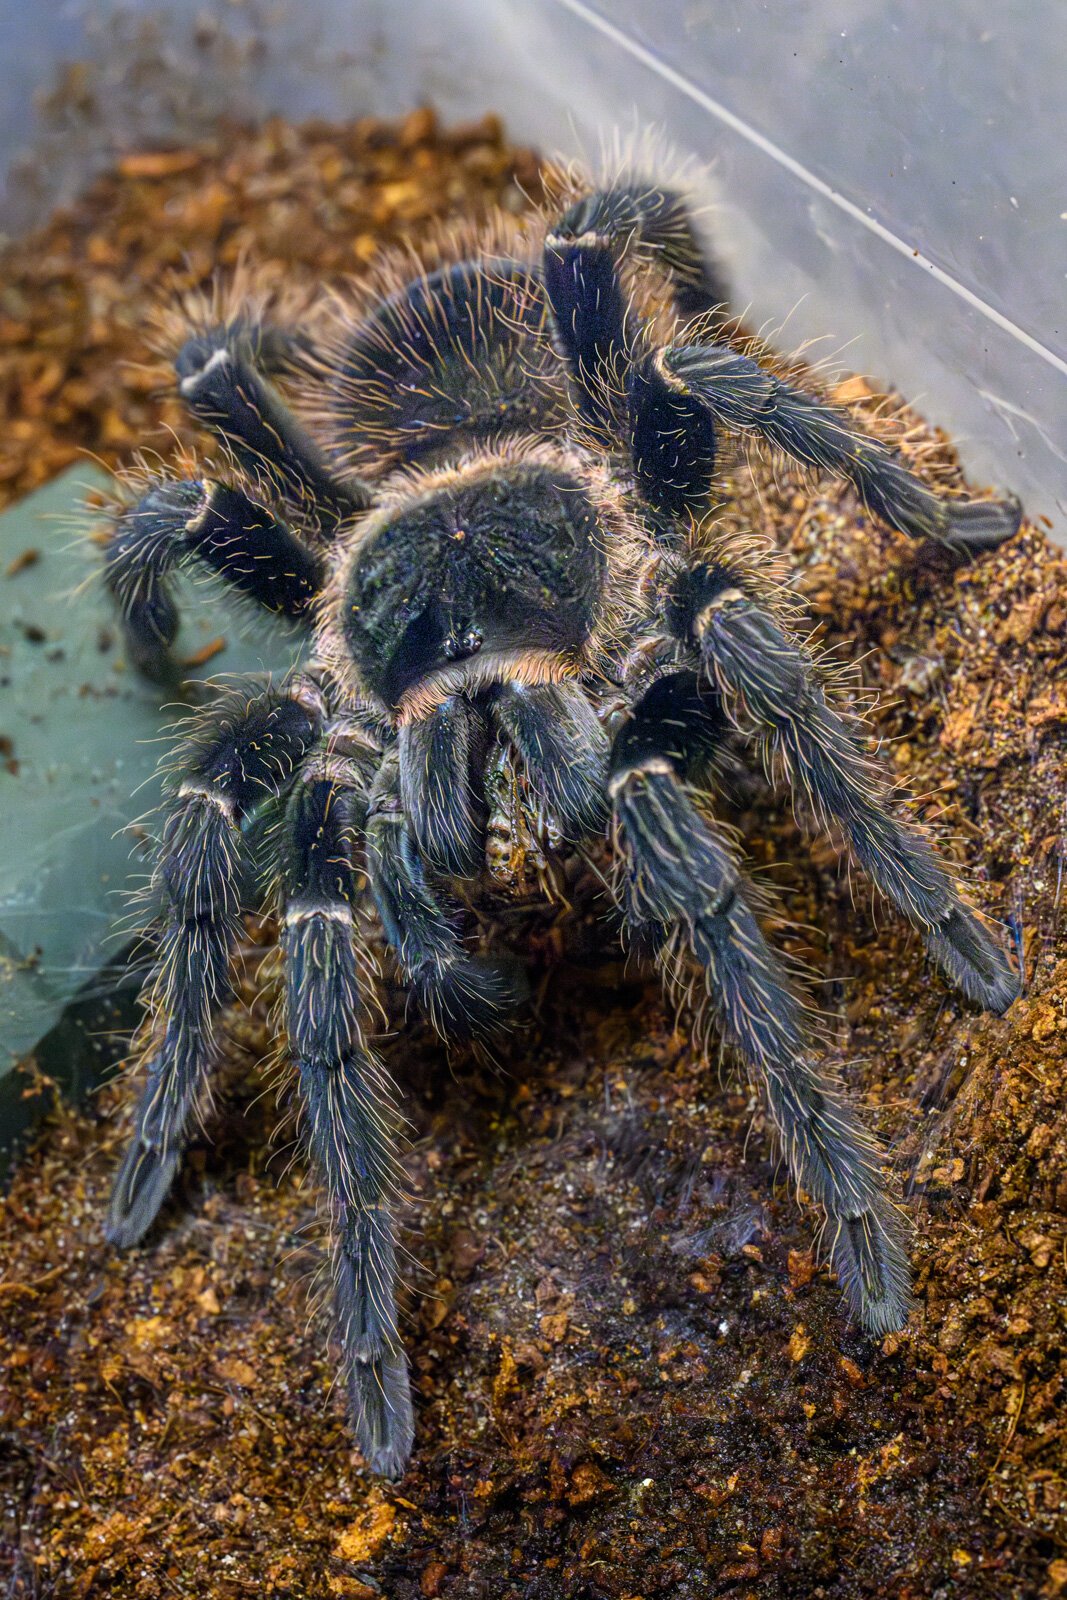 A tarantula eating a cricket at the EMU tarantula lab.